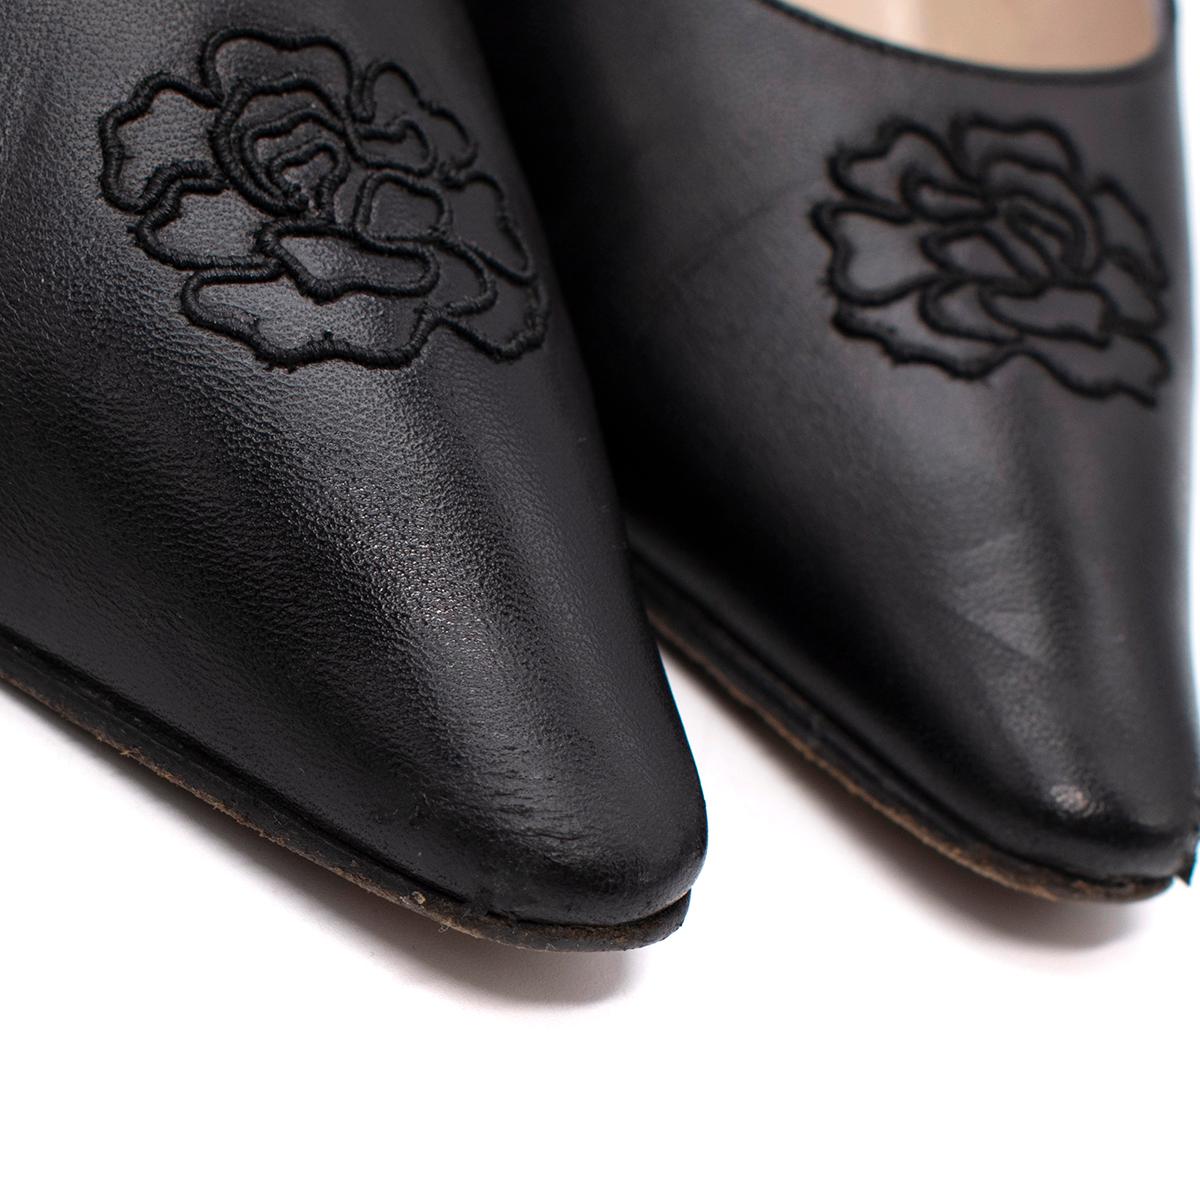 Chanel Black Leather Camellia Embroidered Vintage Pumps - Us size 8 For Sale 3